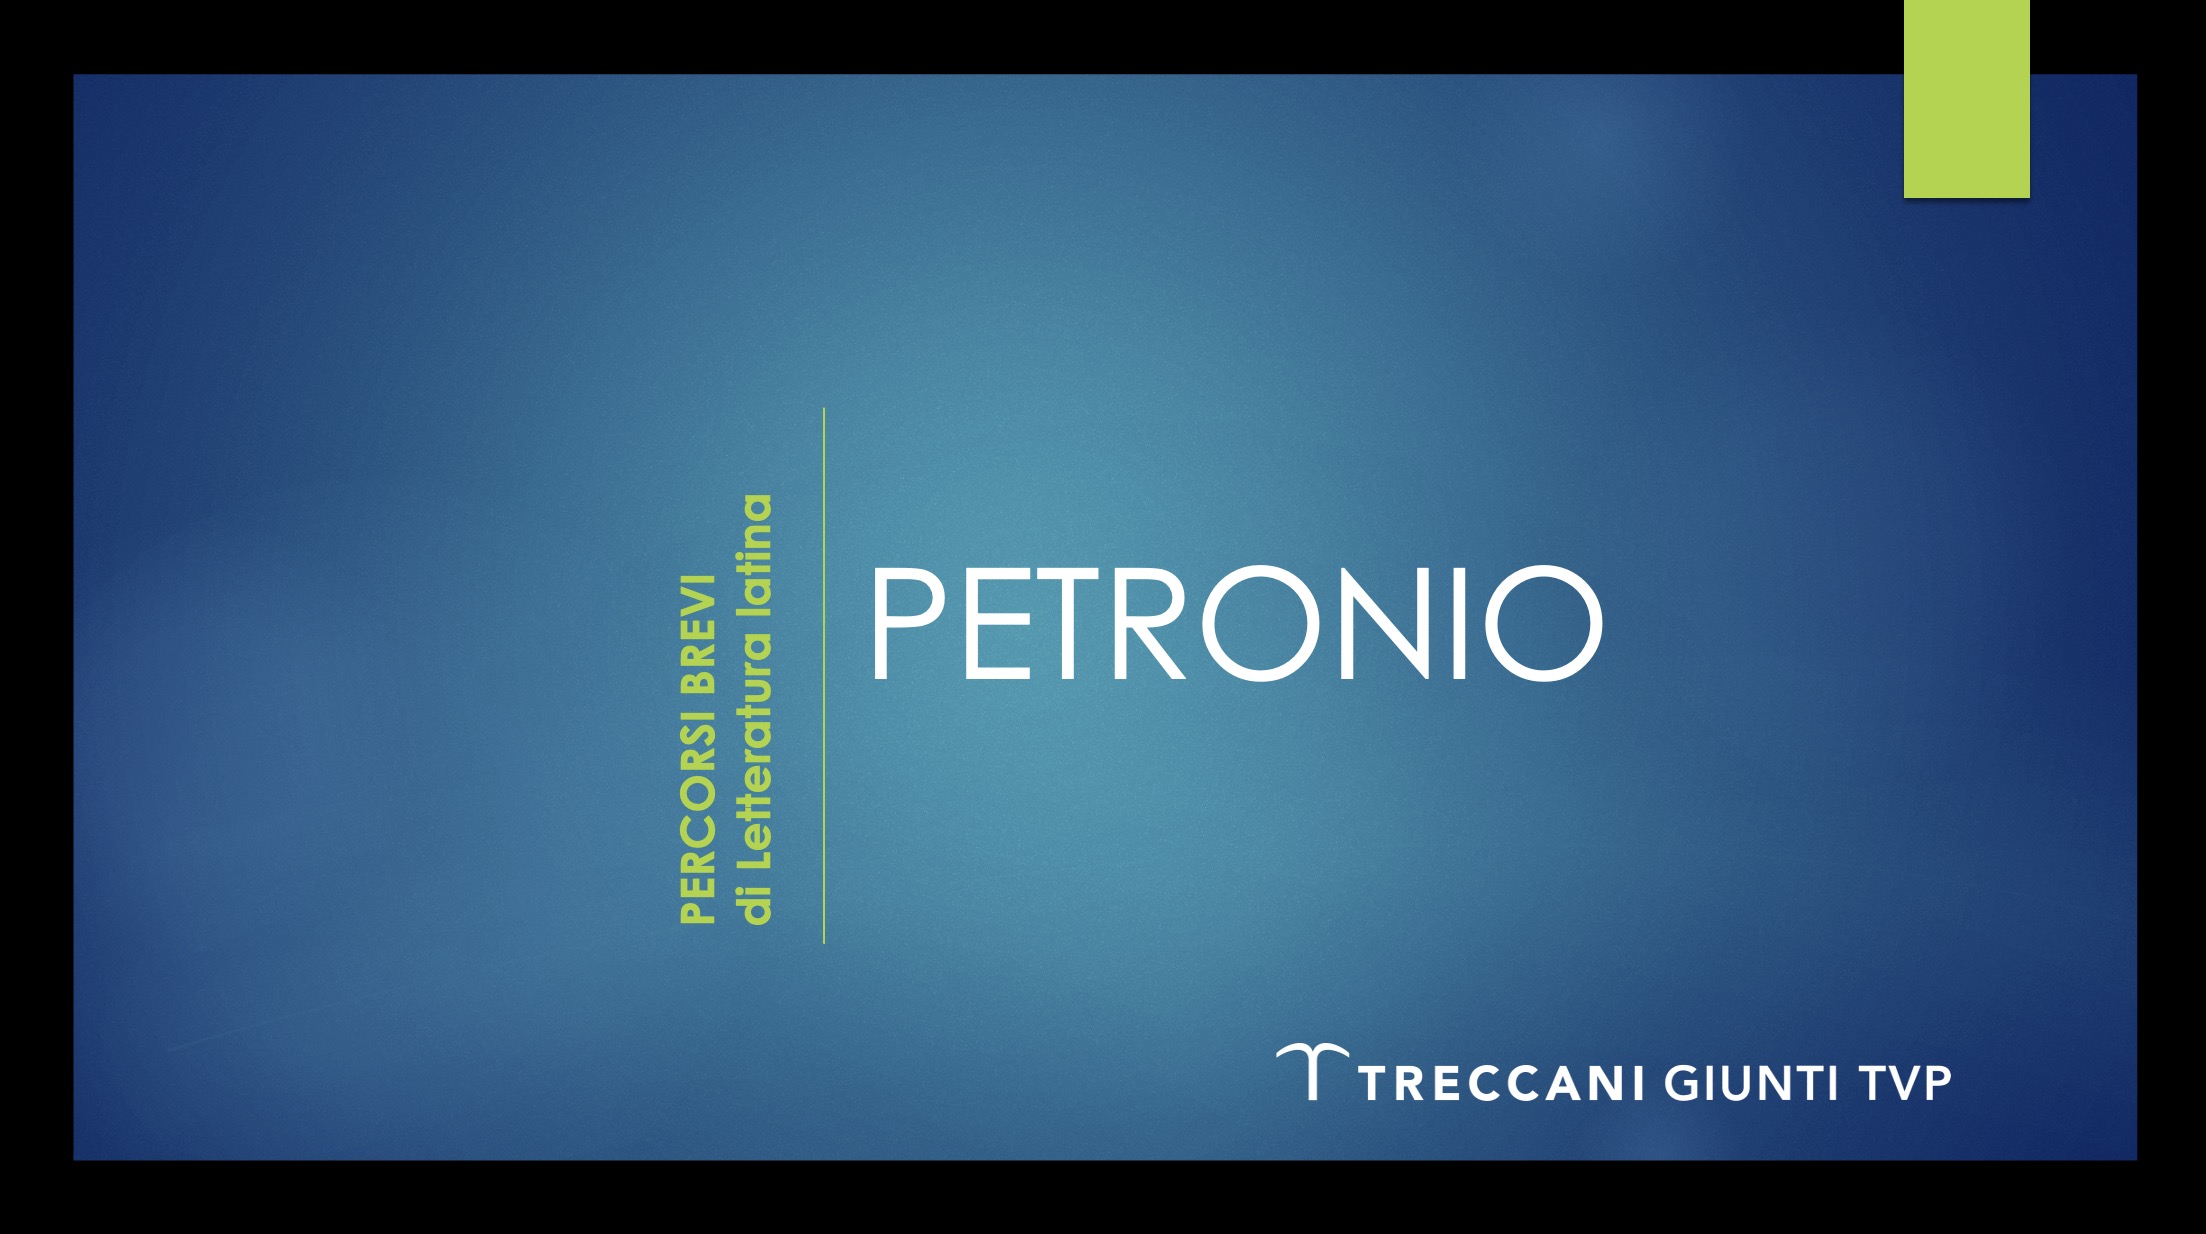 Petronio